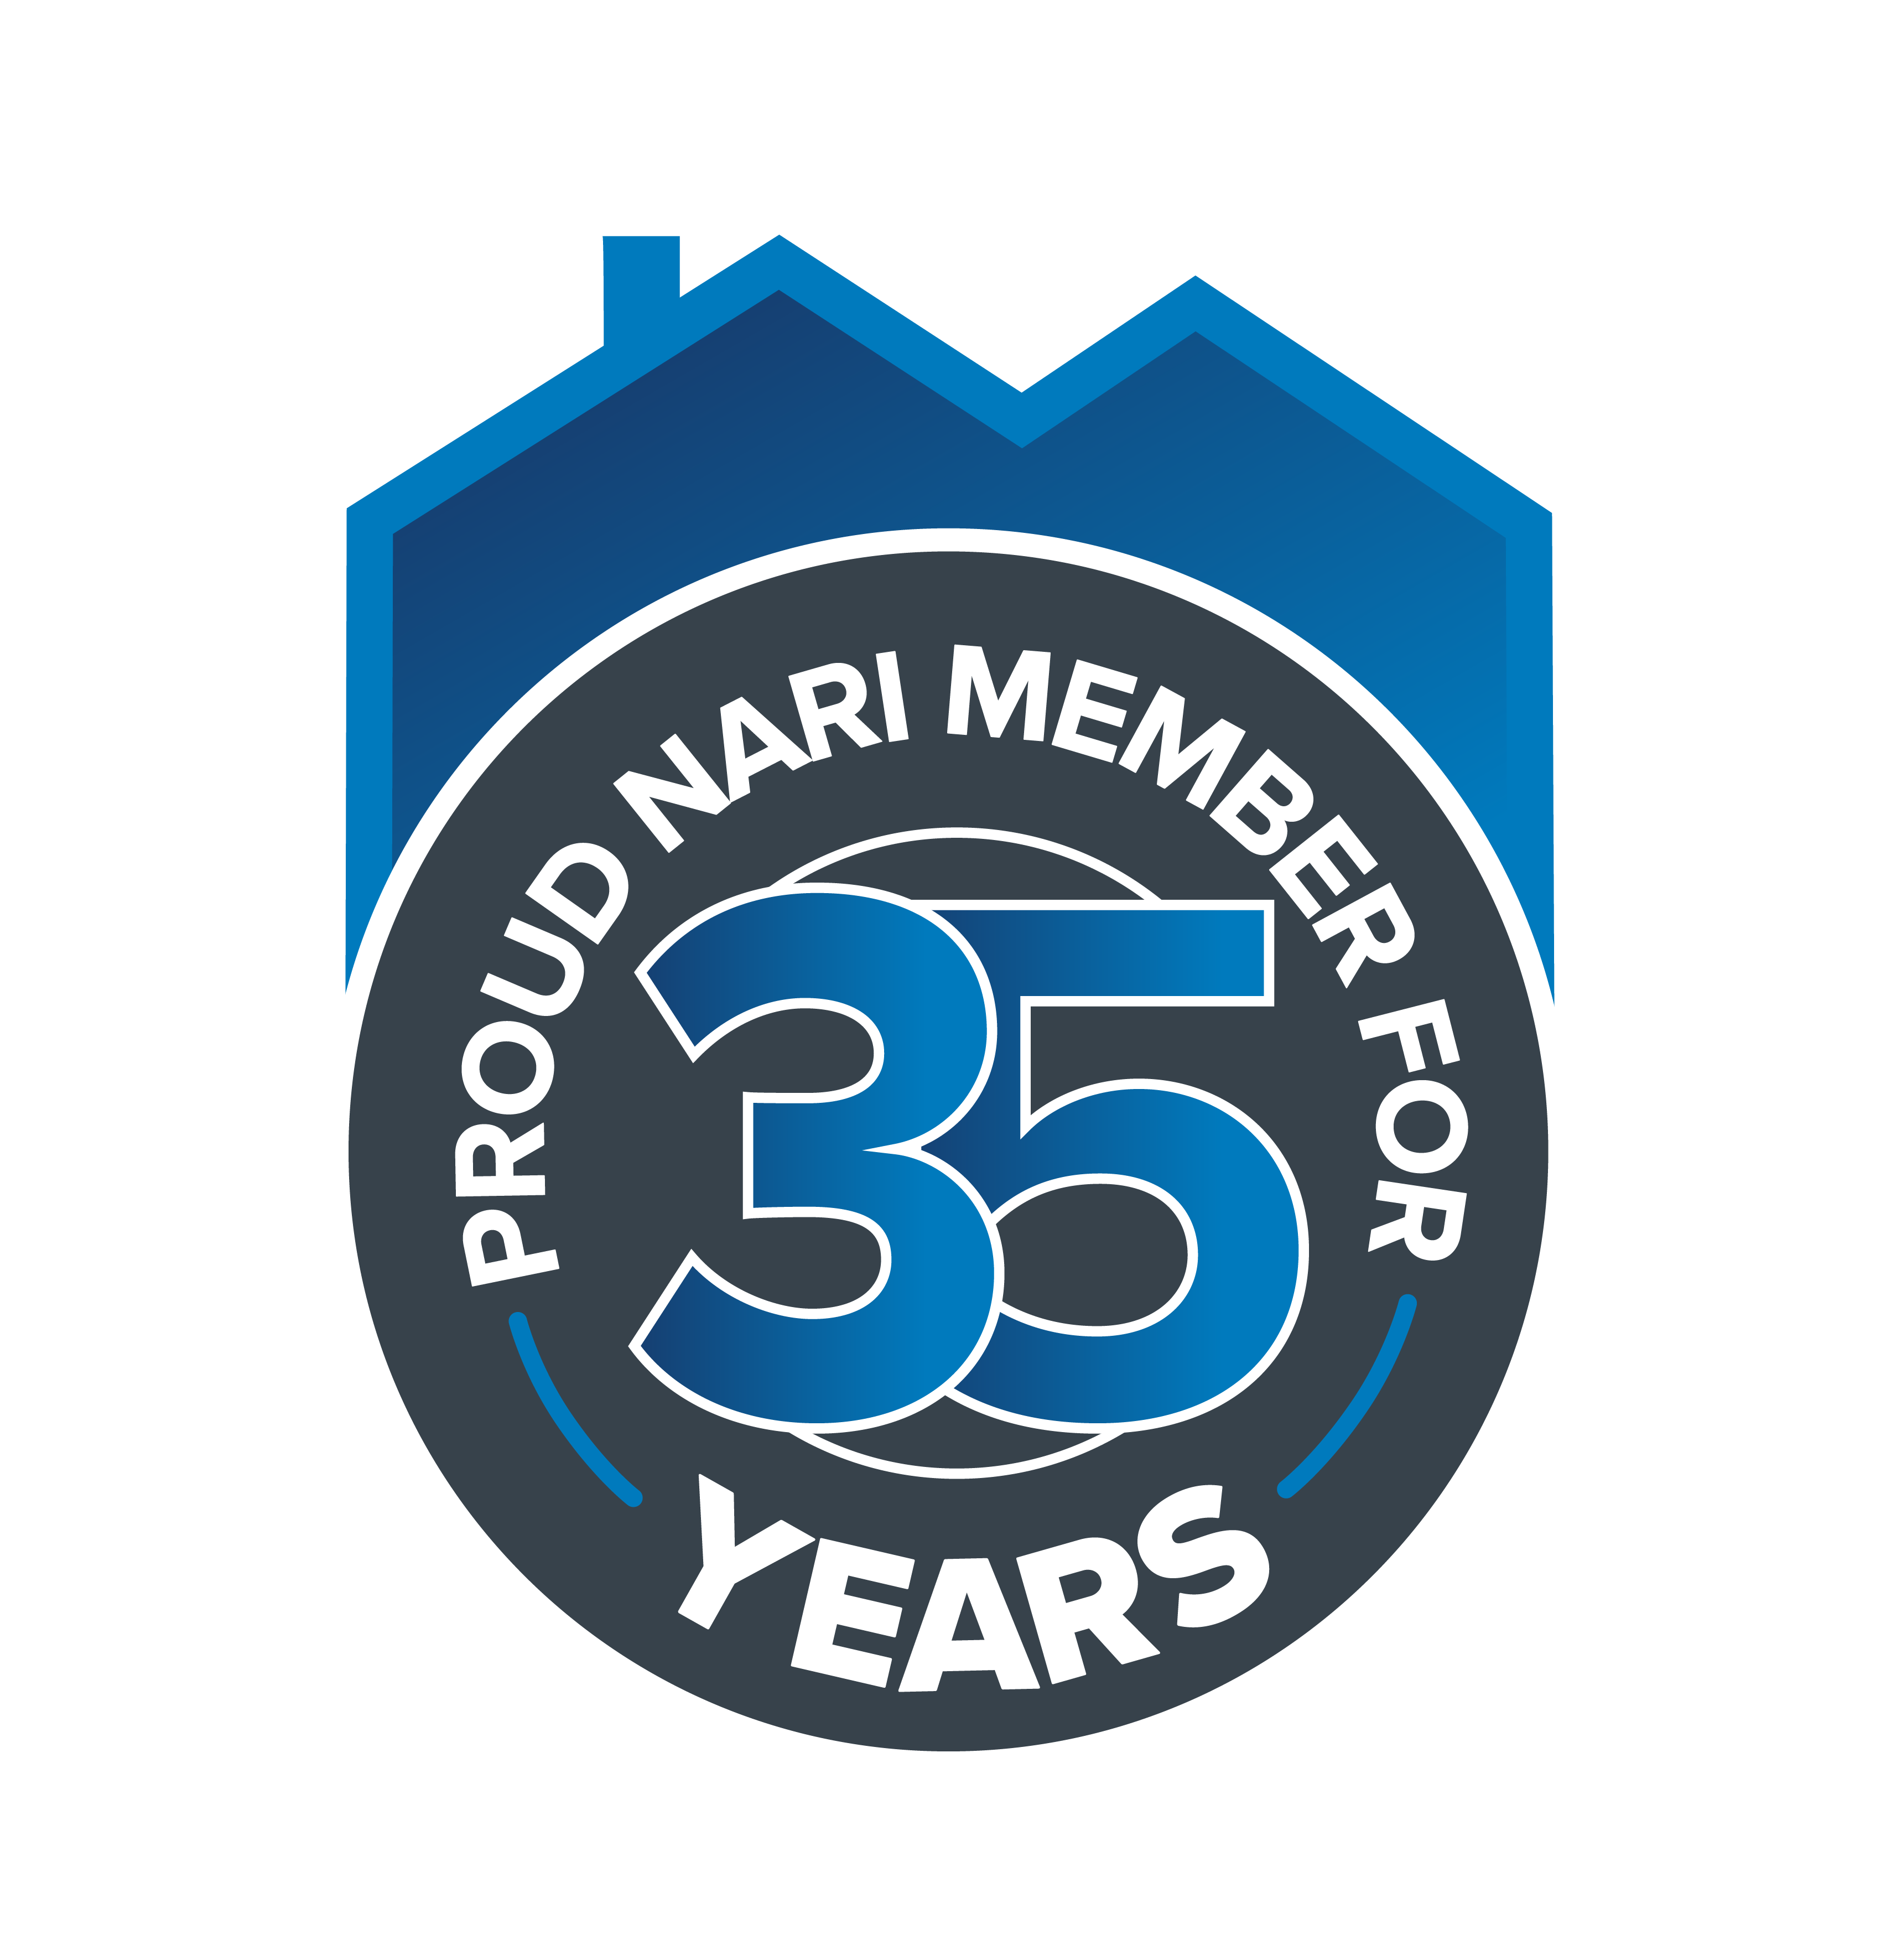 Nari Accredited badge